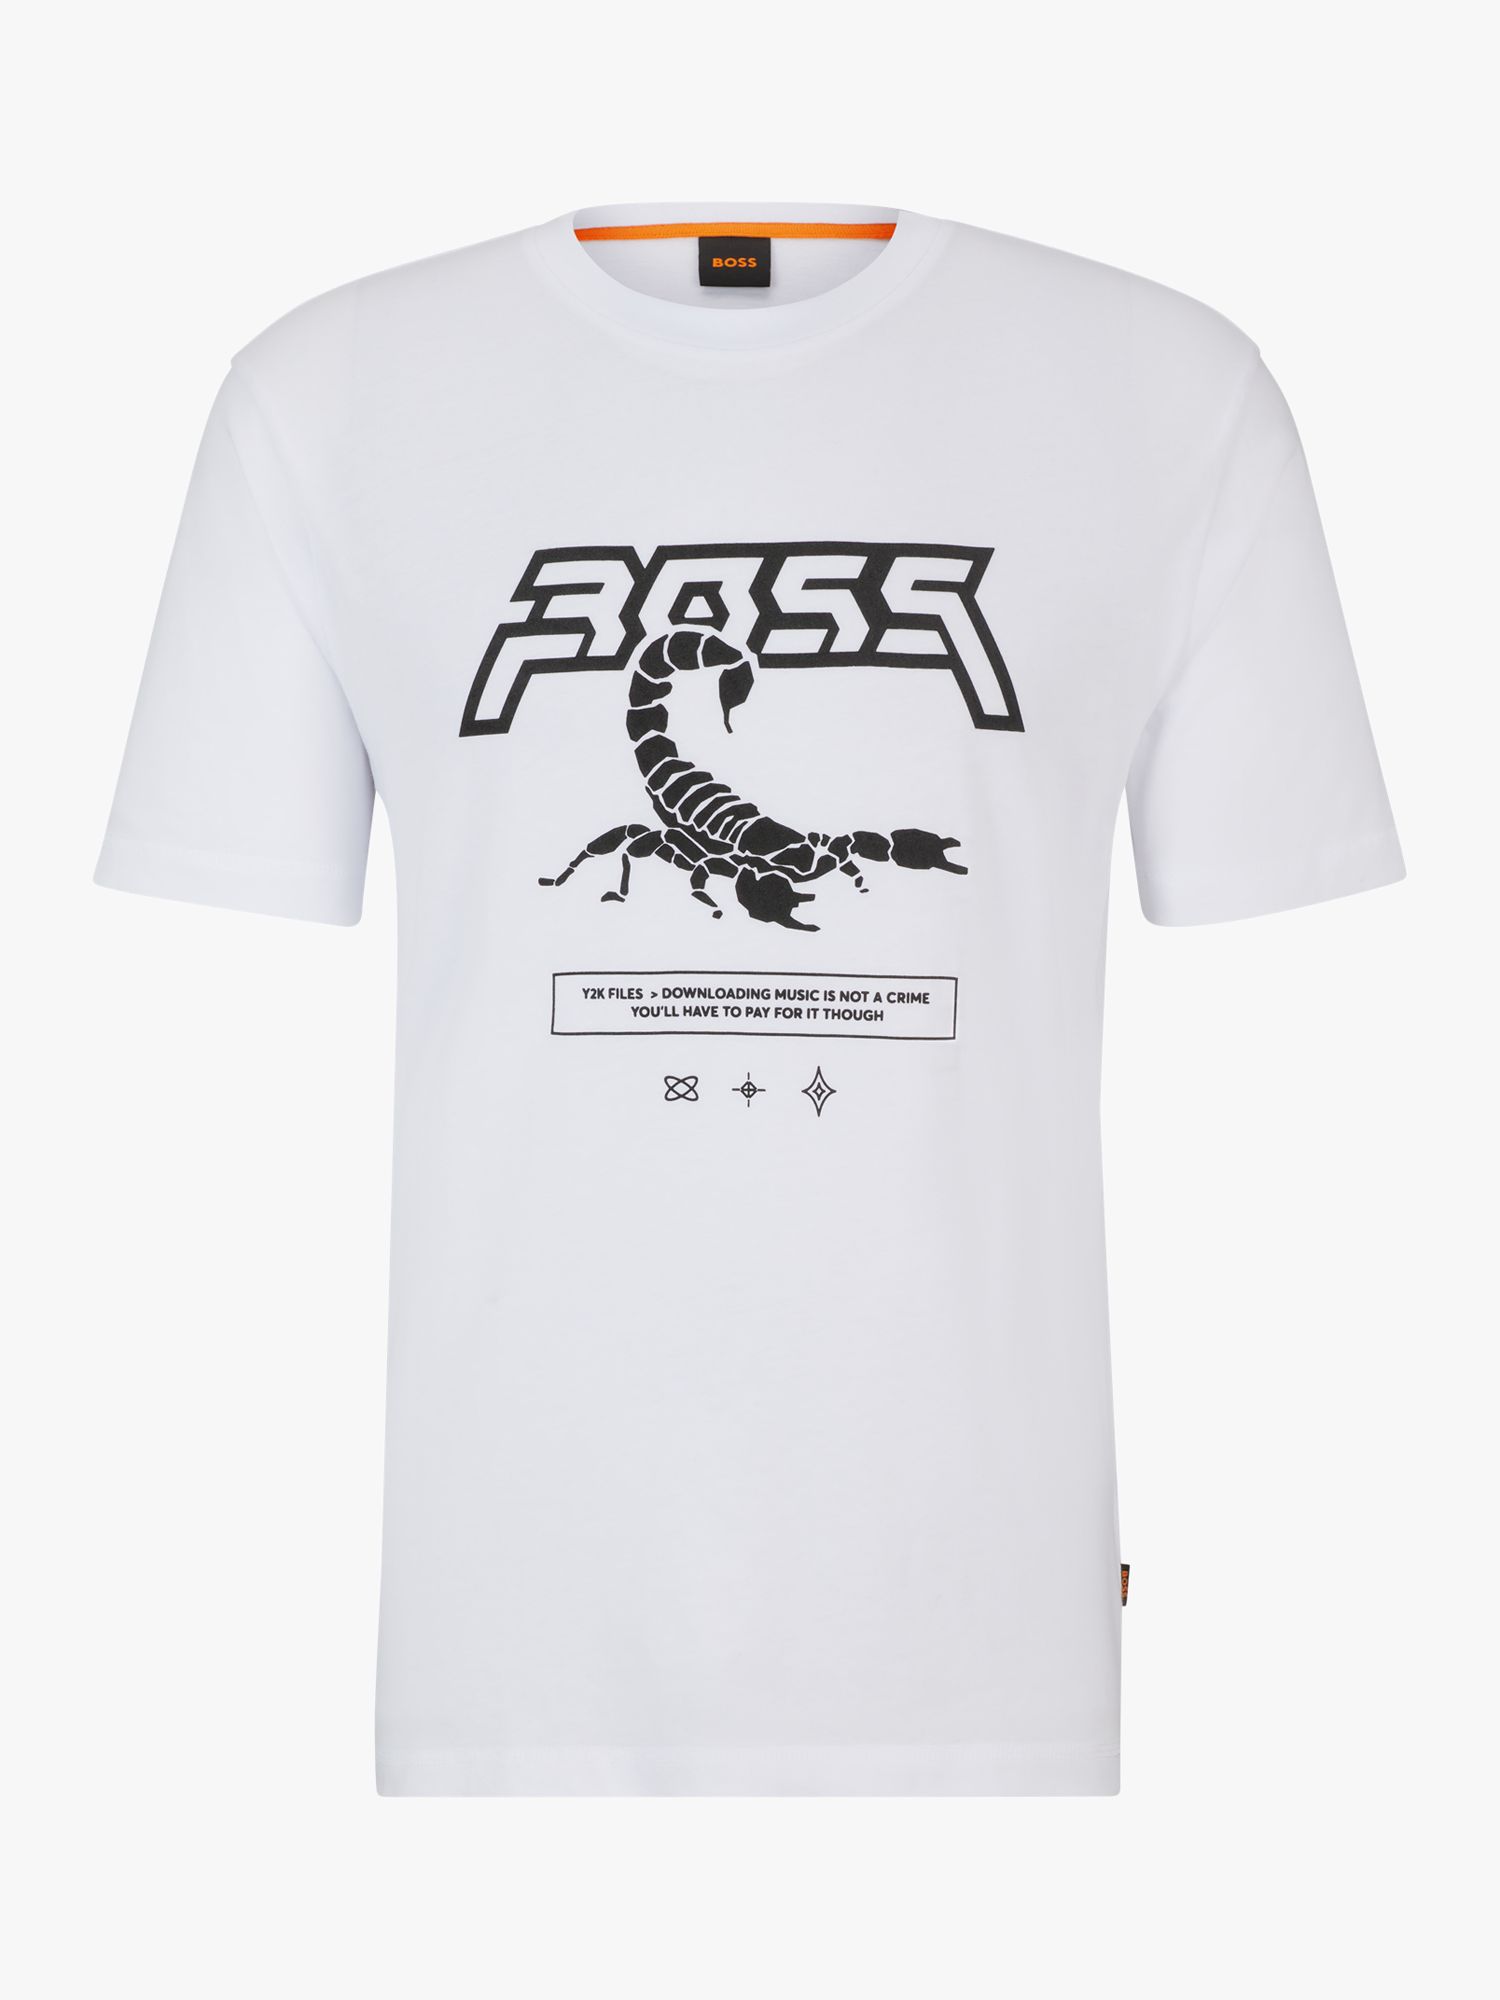 BOSS TeScorpion T-Shirt, White/Black, M